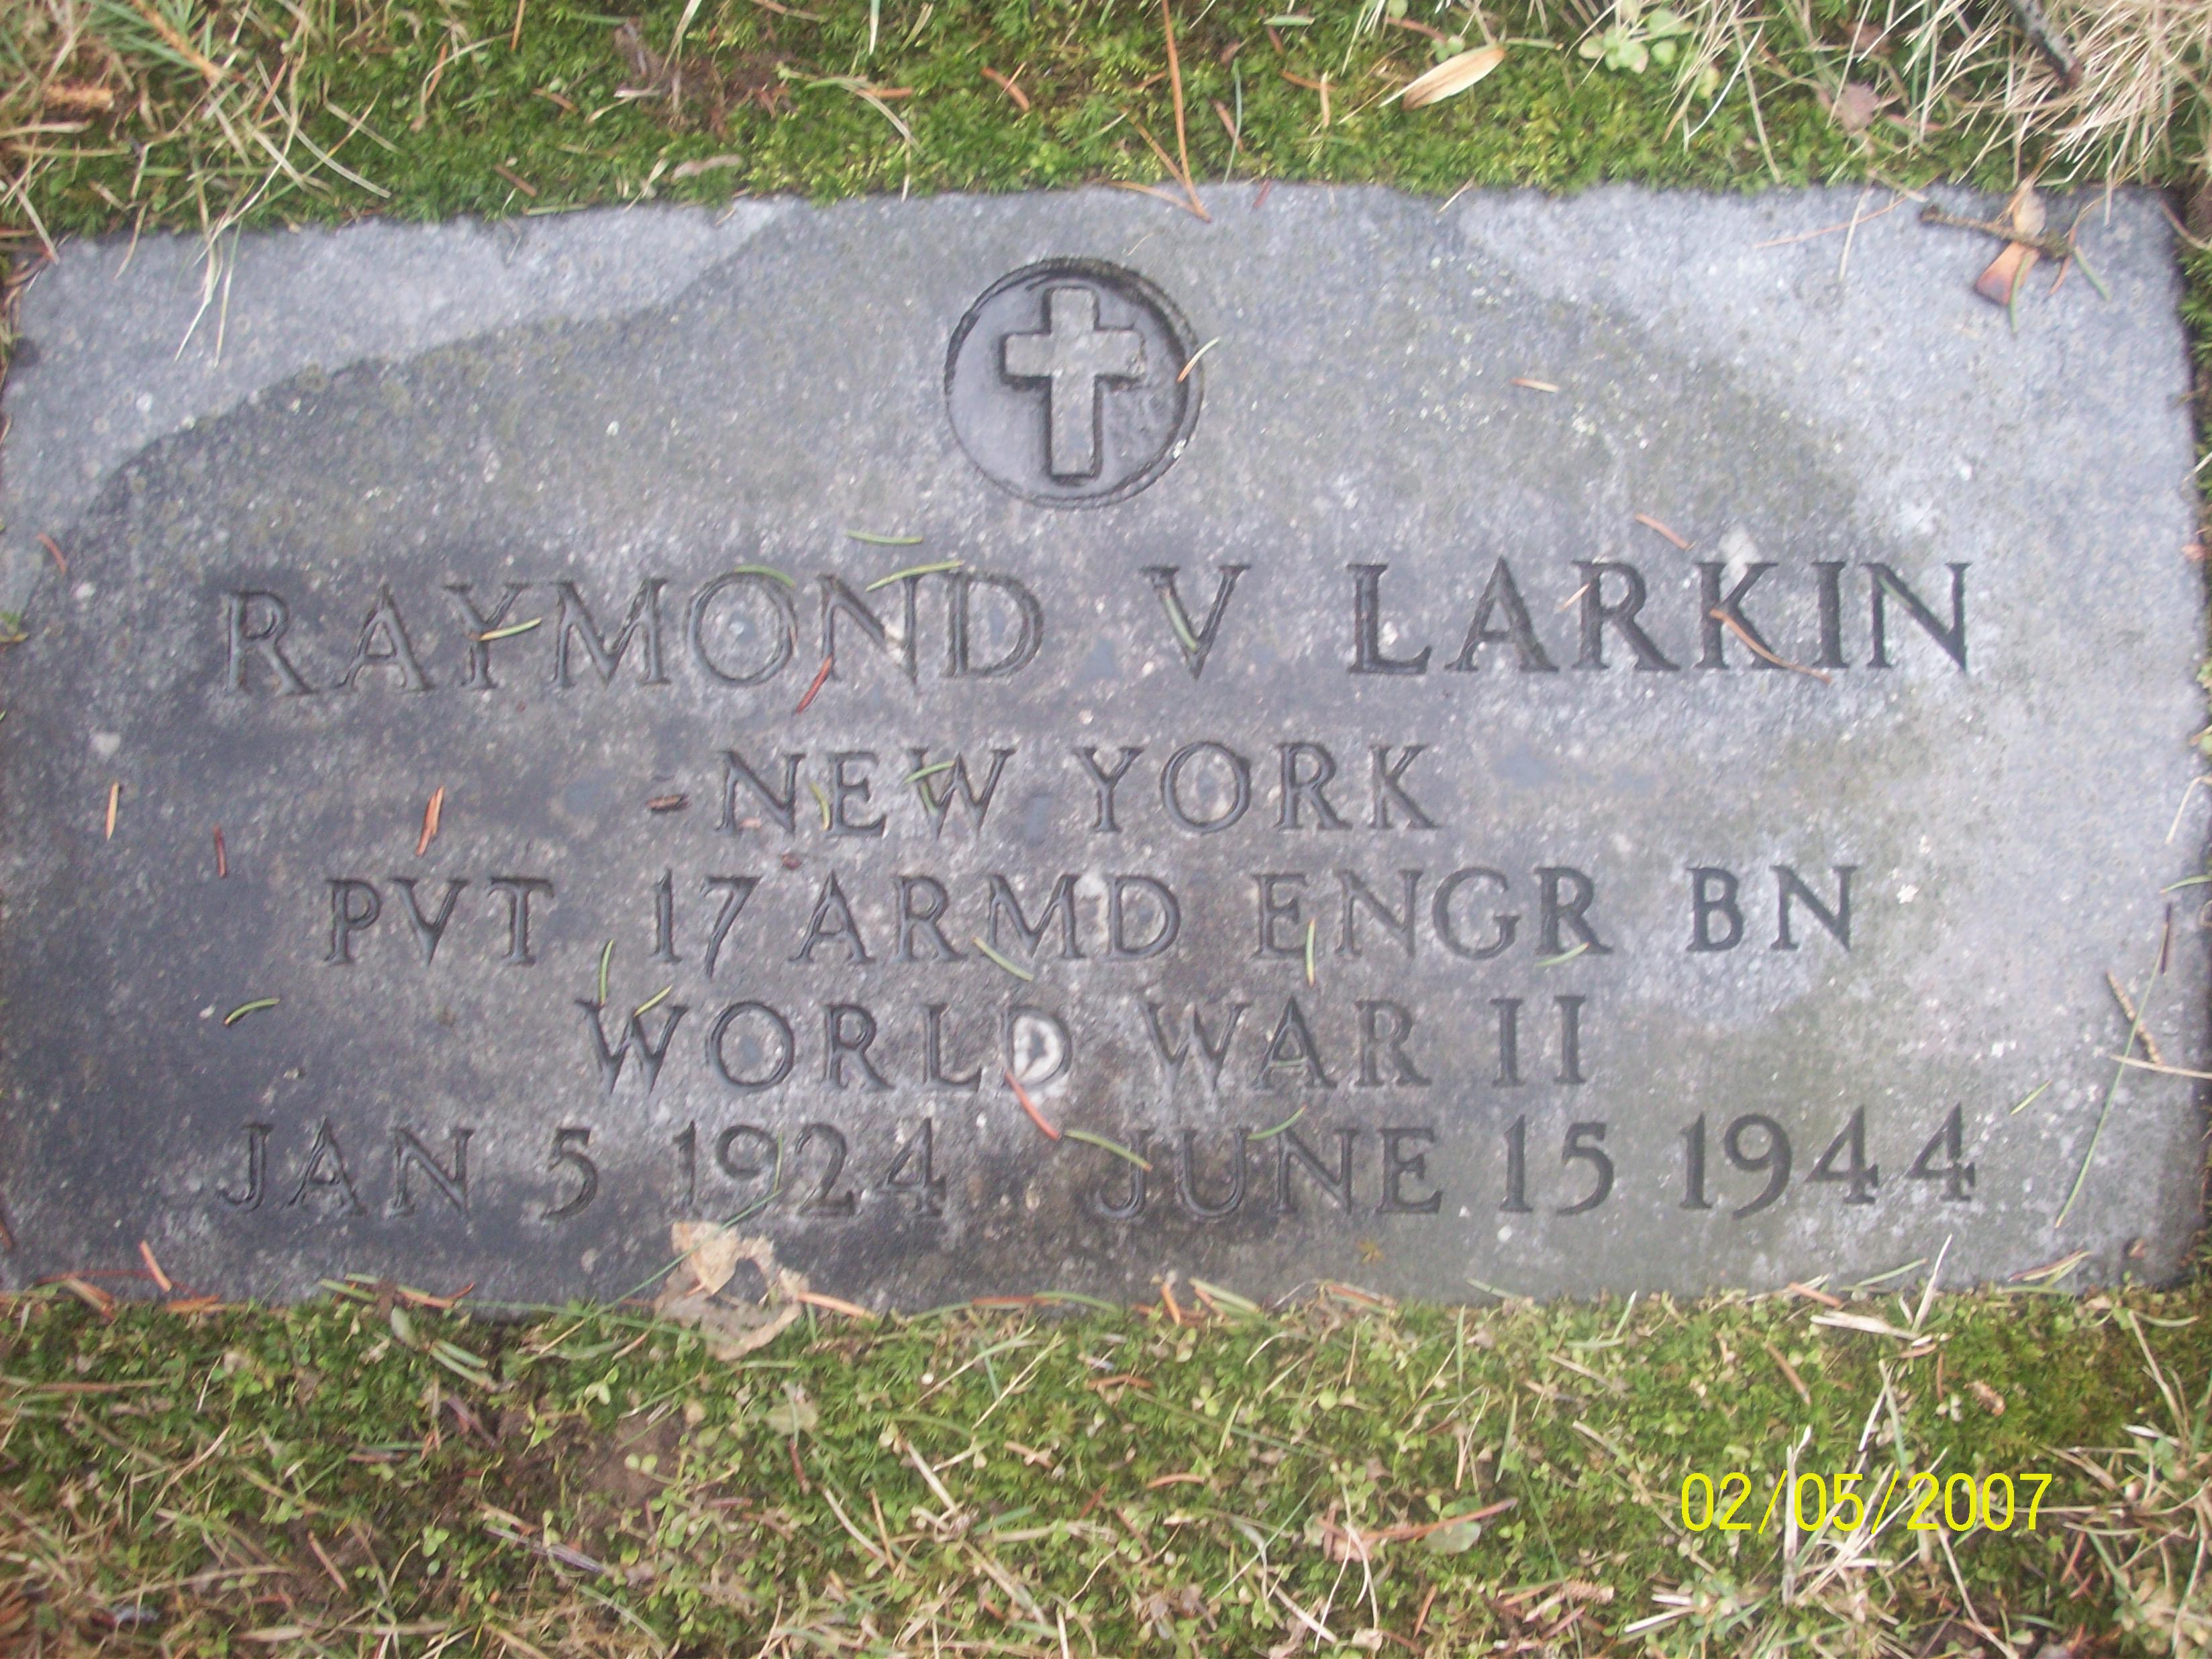 Headstone Raymond V. Larkin 6-15-1944 2